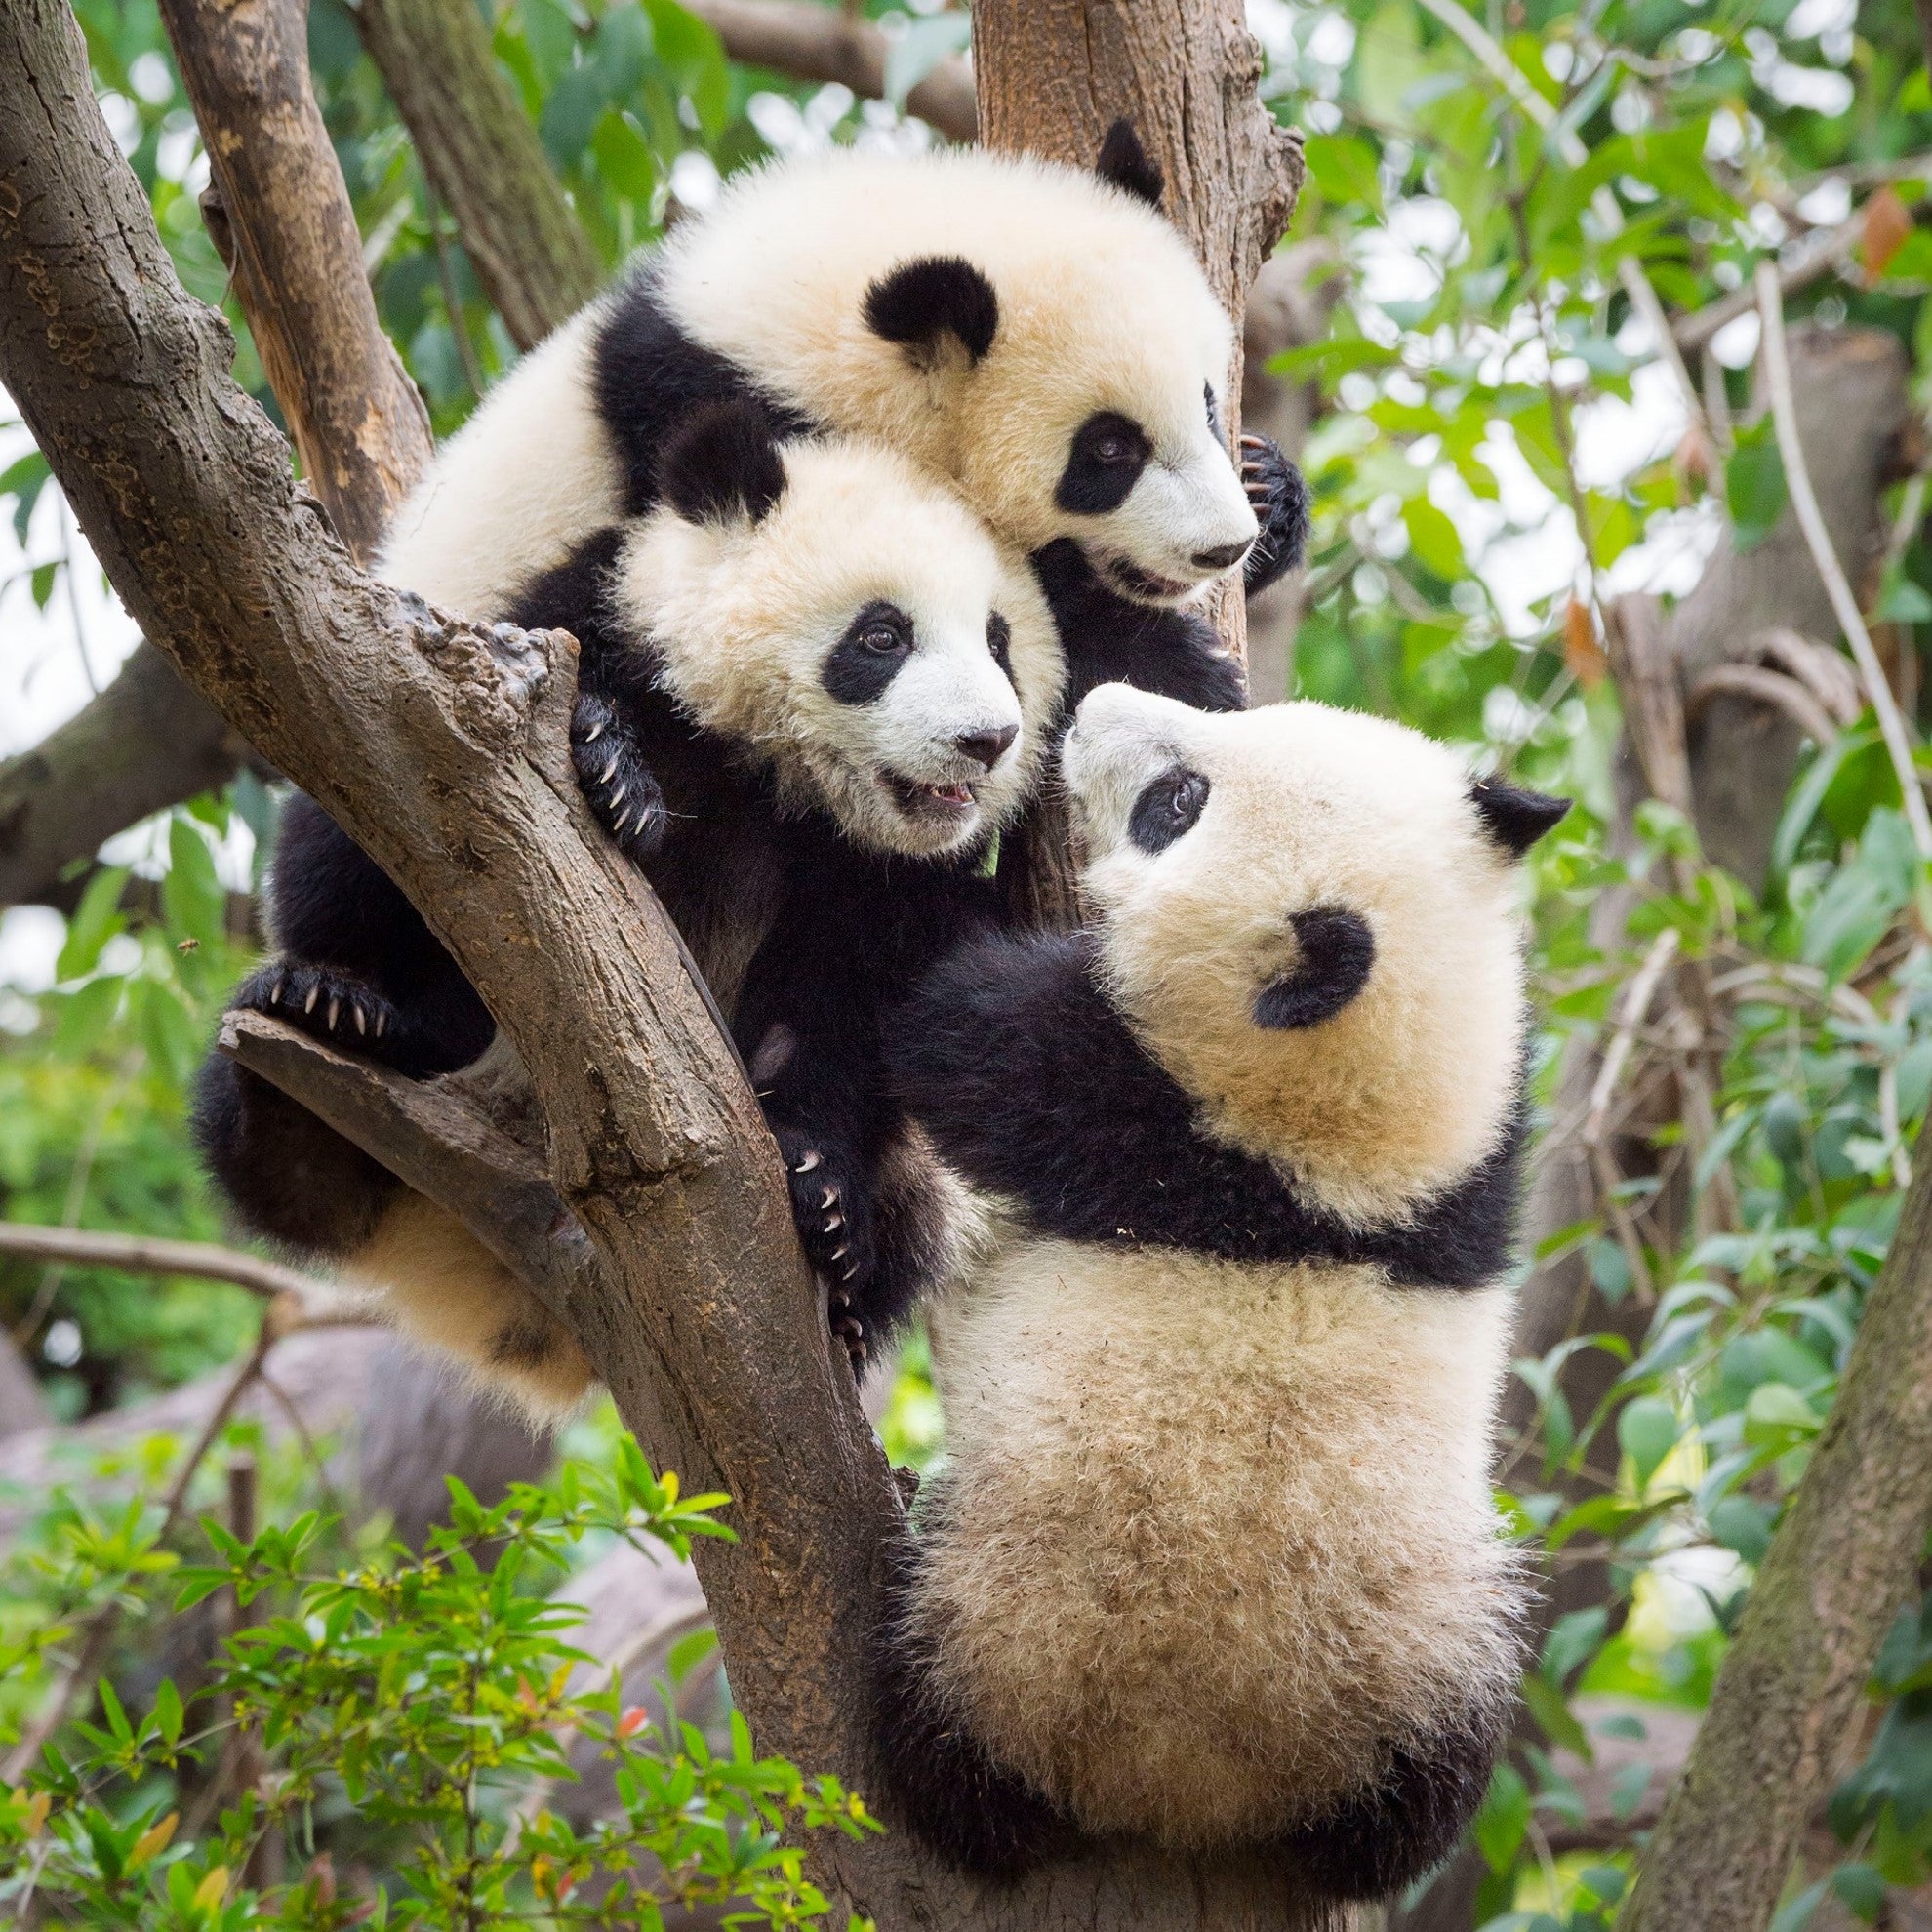 three panda cubs in a tree